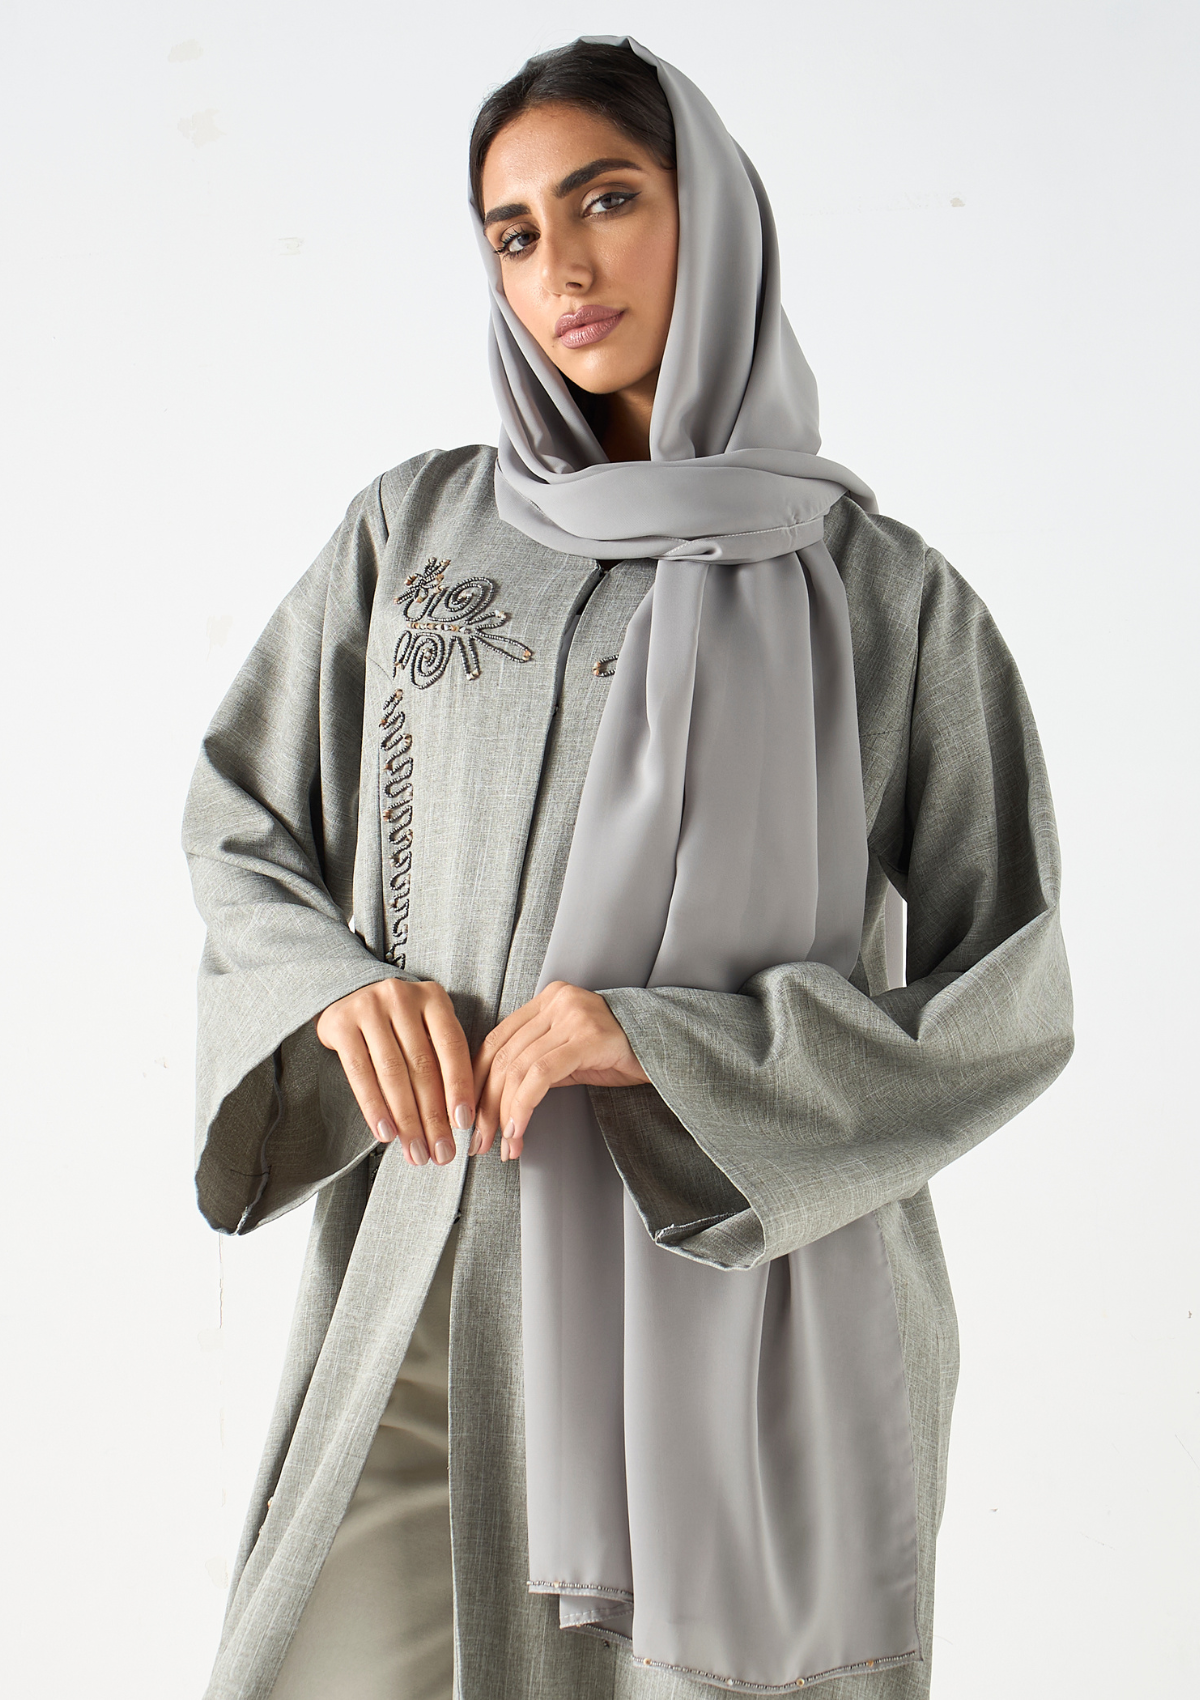 Embellished Abaya with Hijab